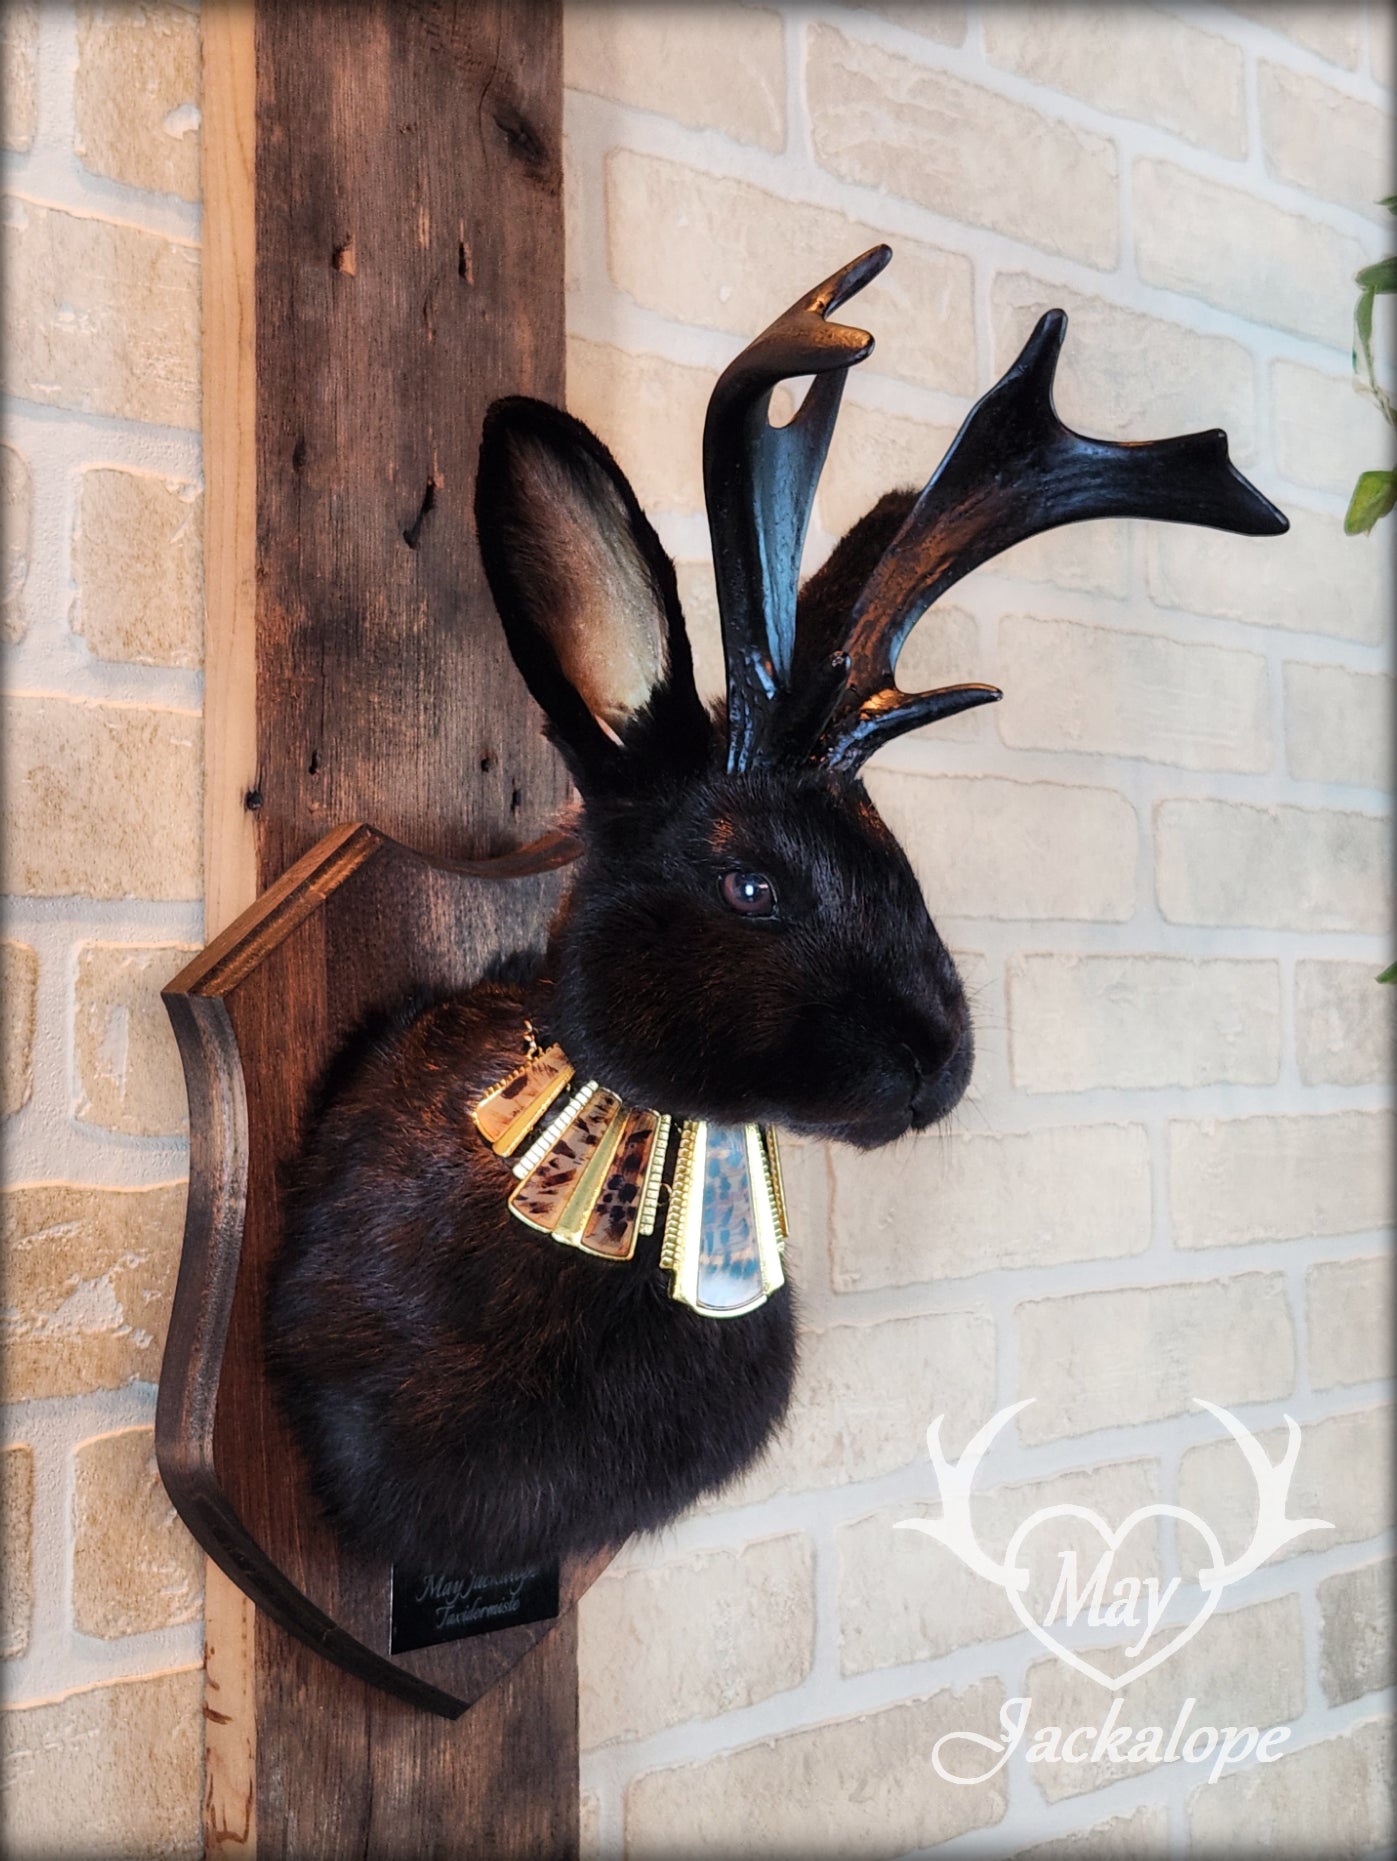 Black Jackalope taxidermy with dark eyes, black antlers replica & necklace.